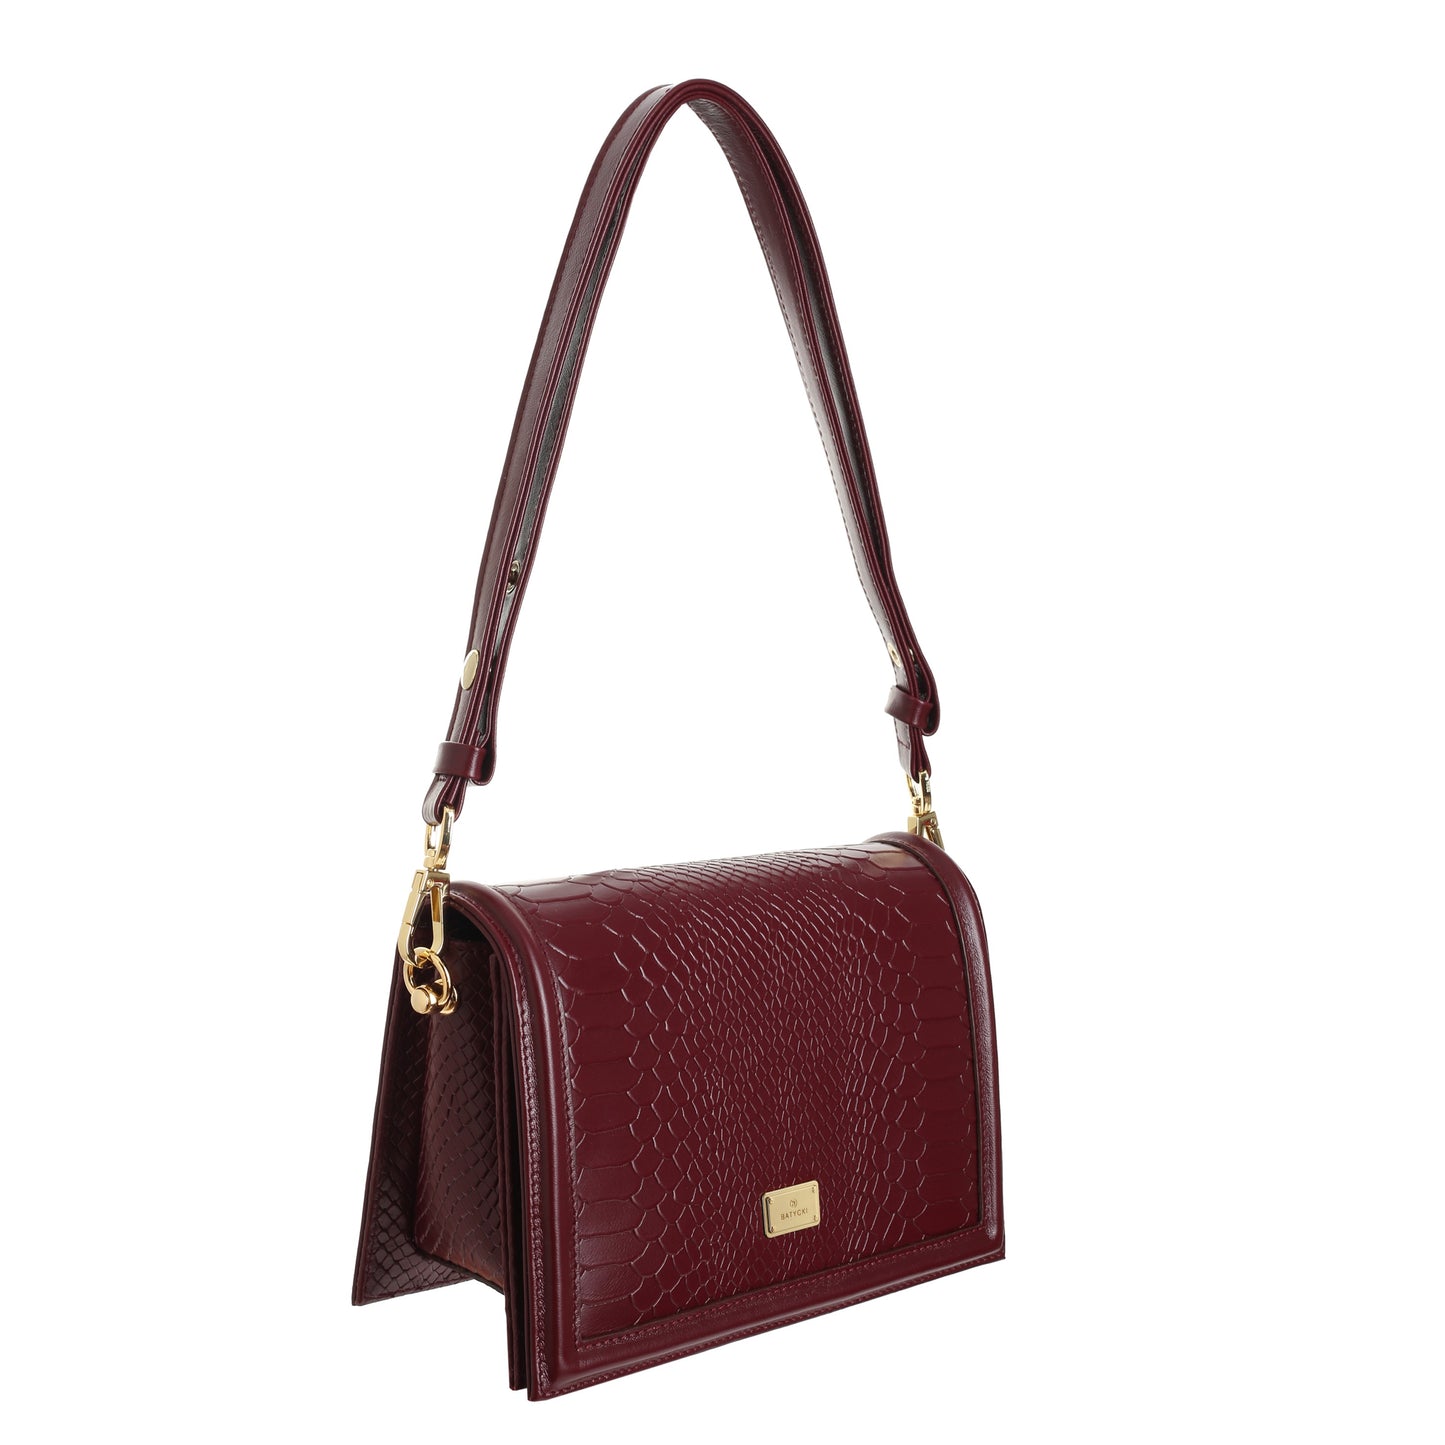 MAYA CLARET women's leather handbag